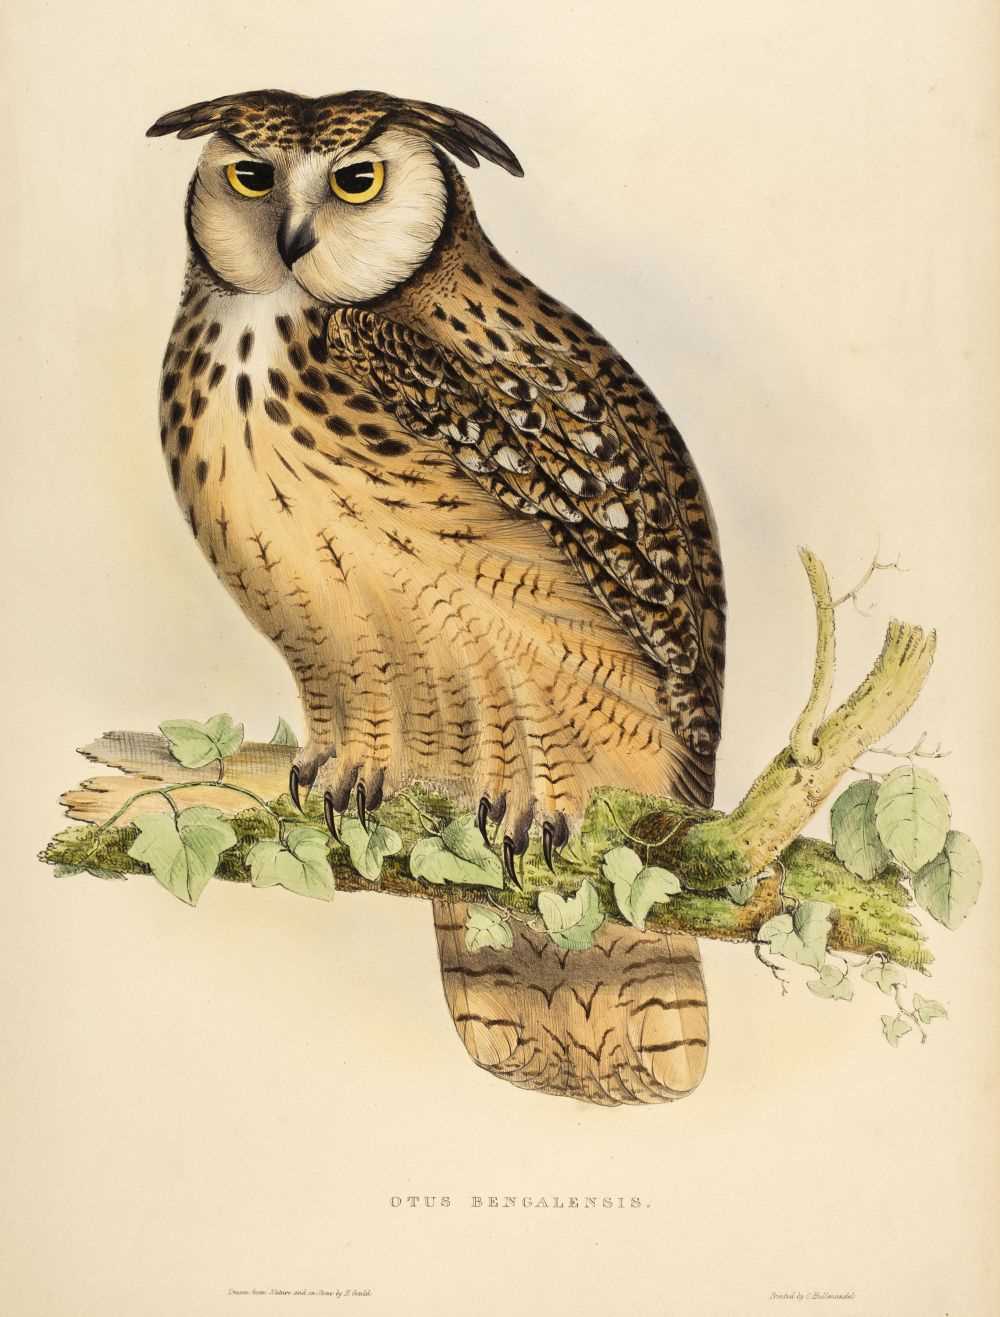 Lot 79 - Gould (John, 1804-1881). Otus Bengalensis, 1831